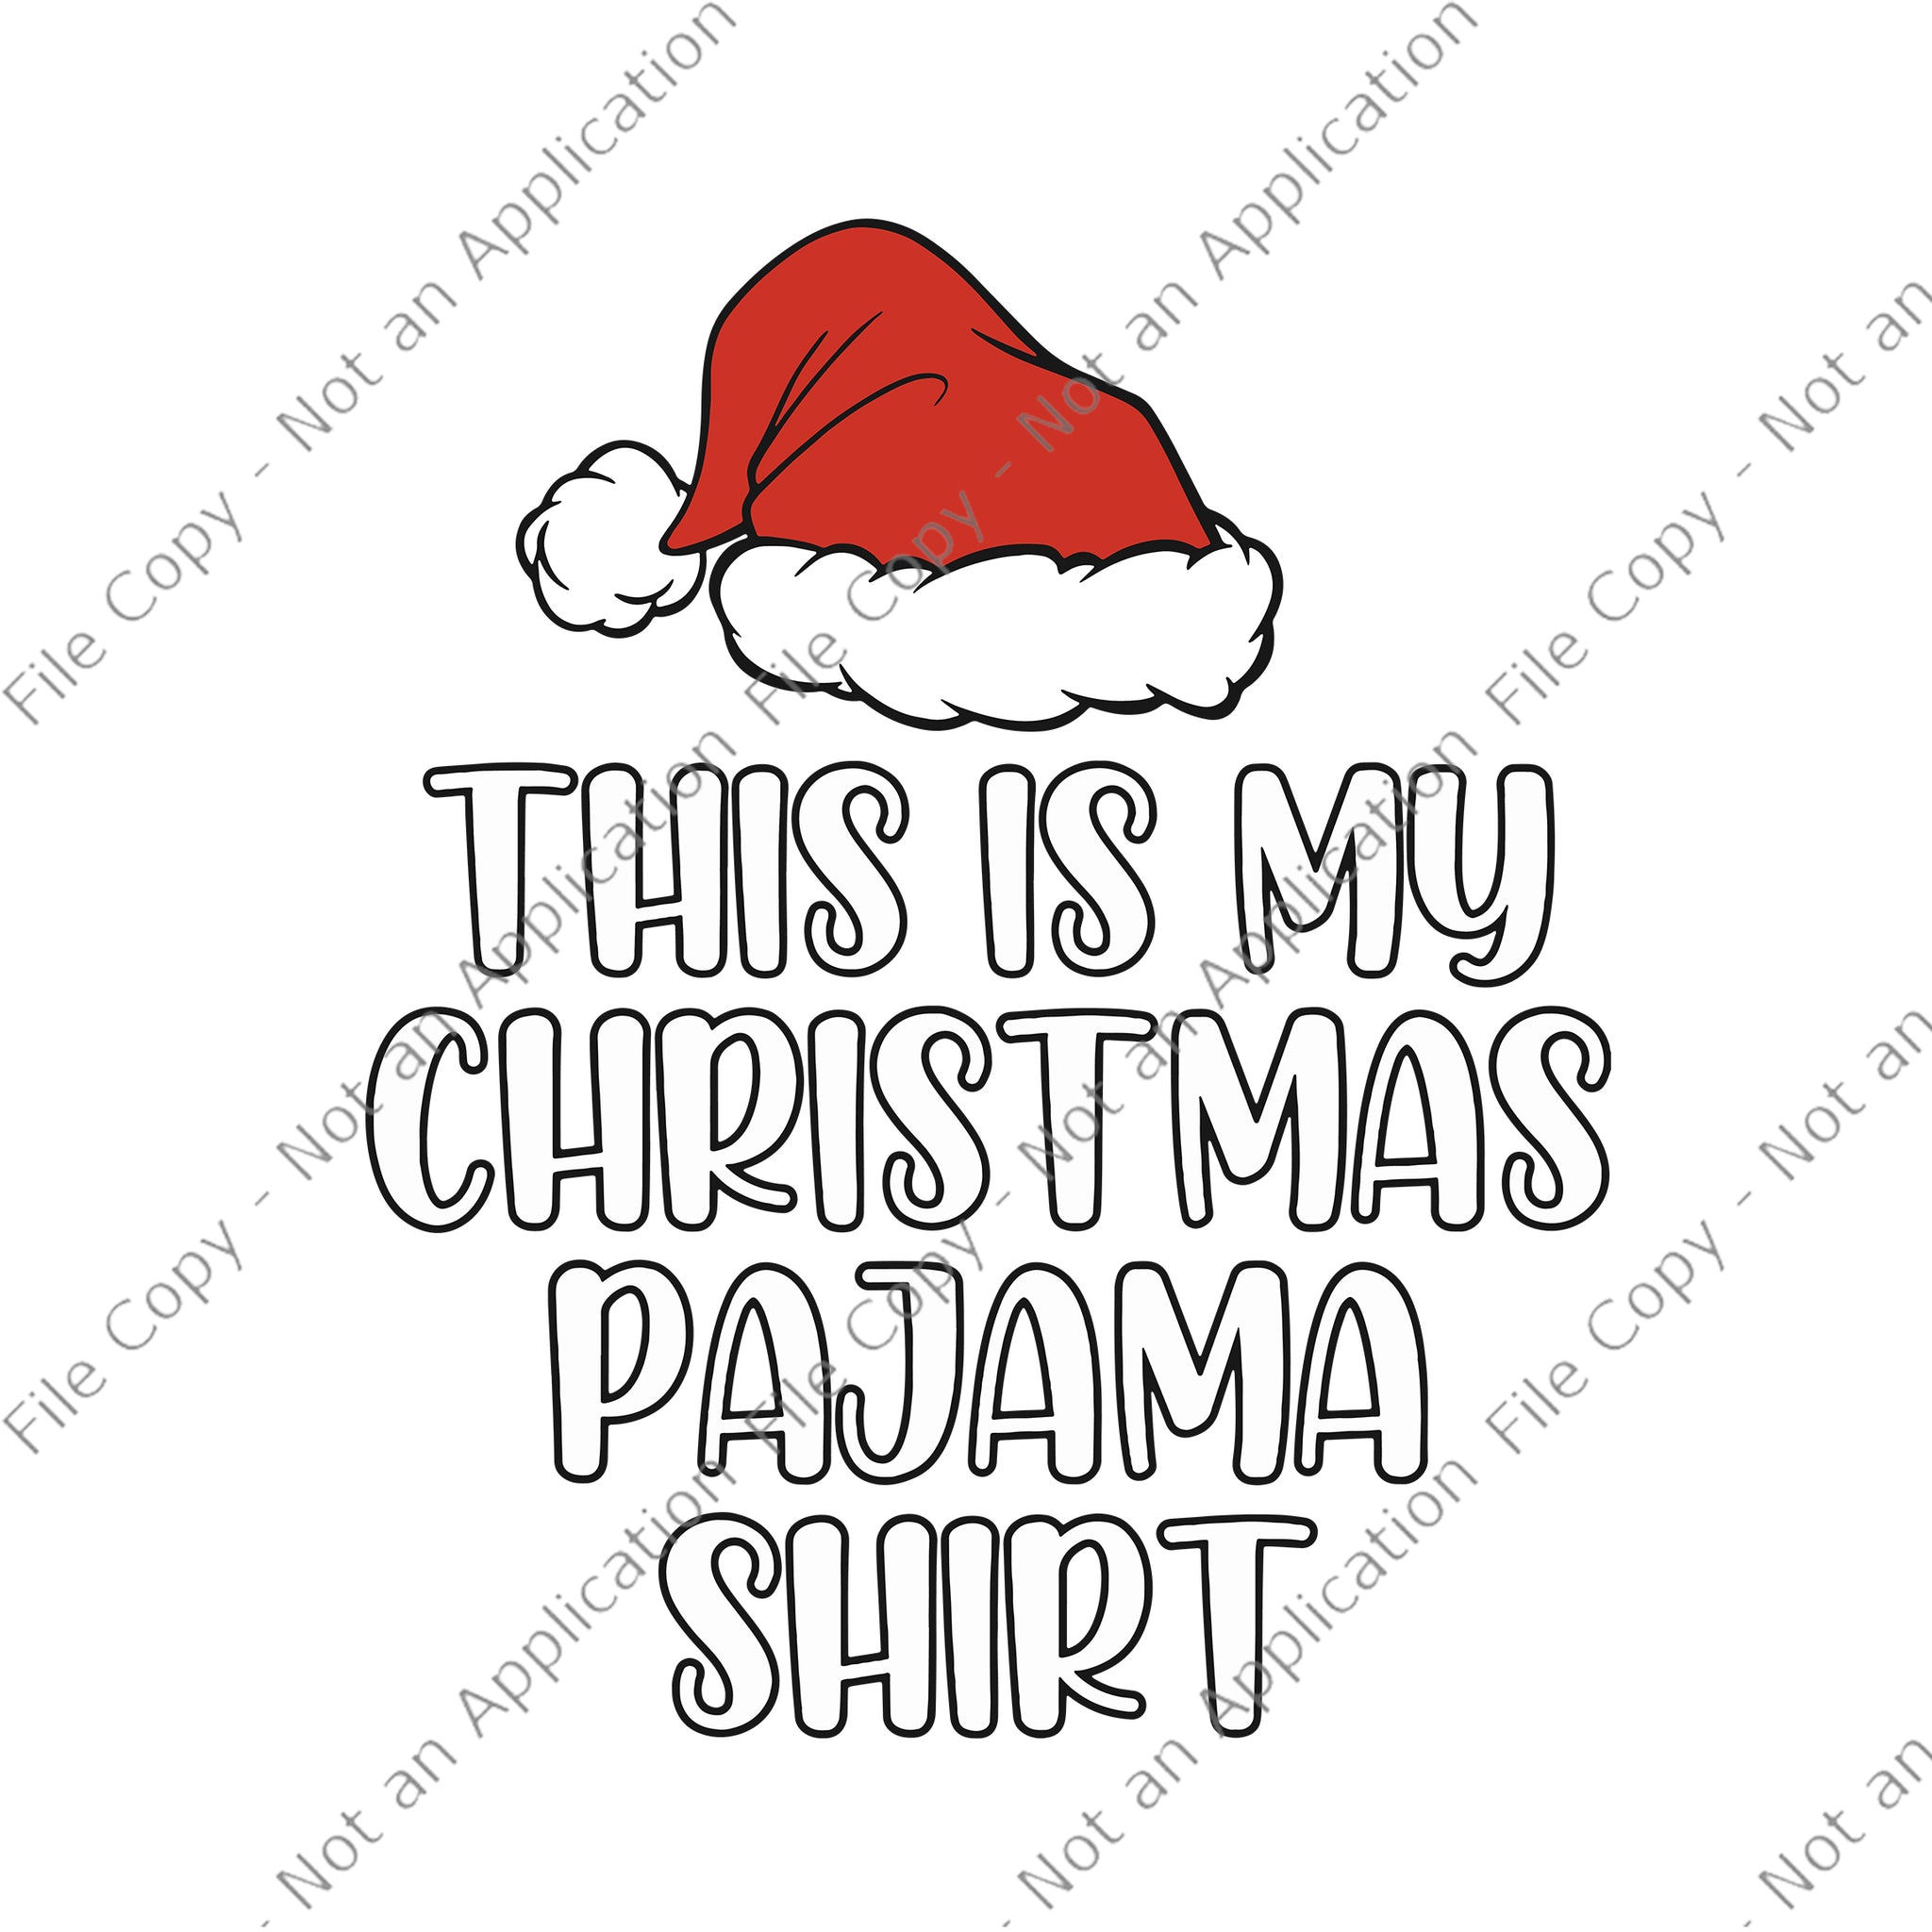 This Is My Christmas Pajama Shirt Svg, Hat Santa Svg, Christmas Pajama Svg, Christmas Svg, Santa Svg